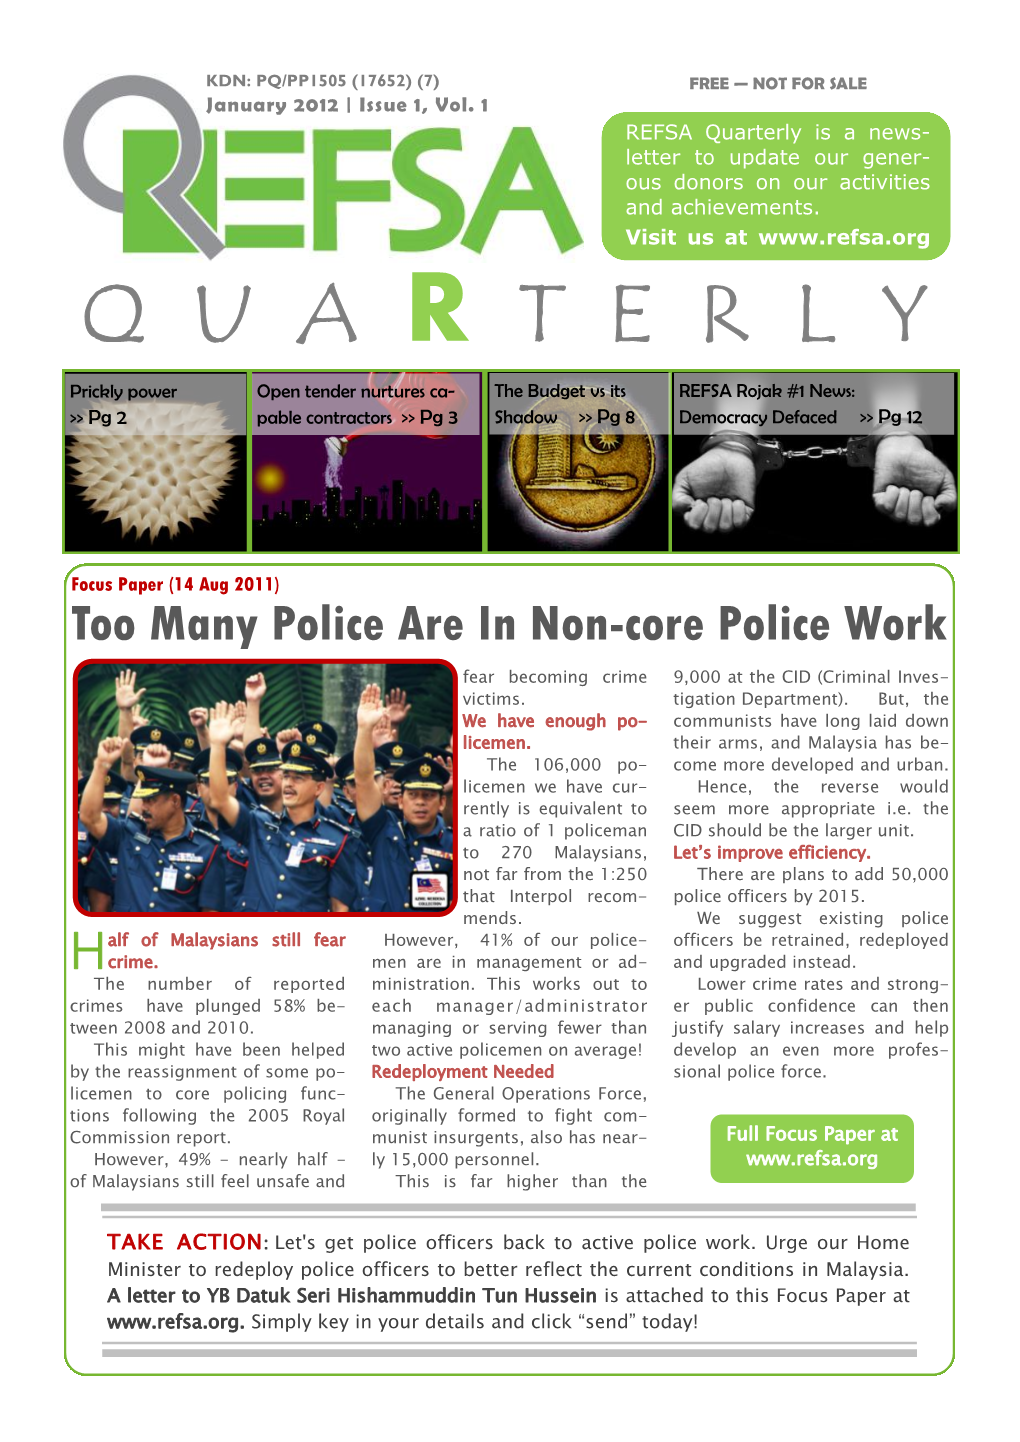 REFSA-Quarterly-Jan-2012.Pdf